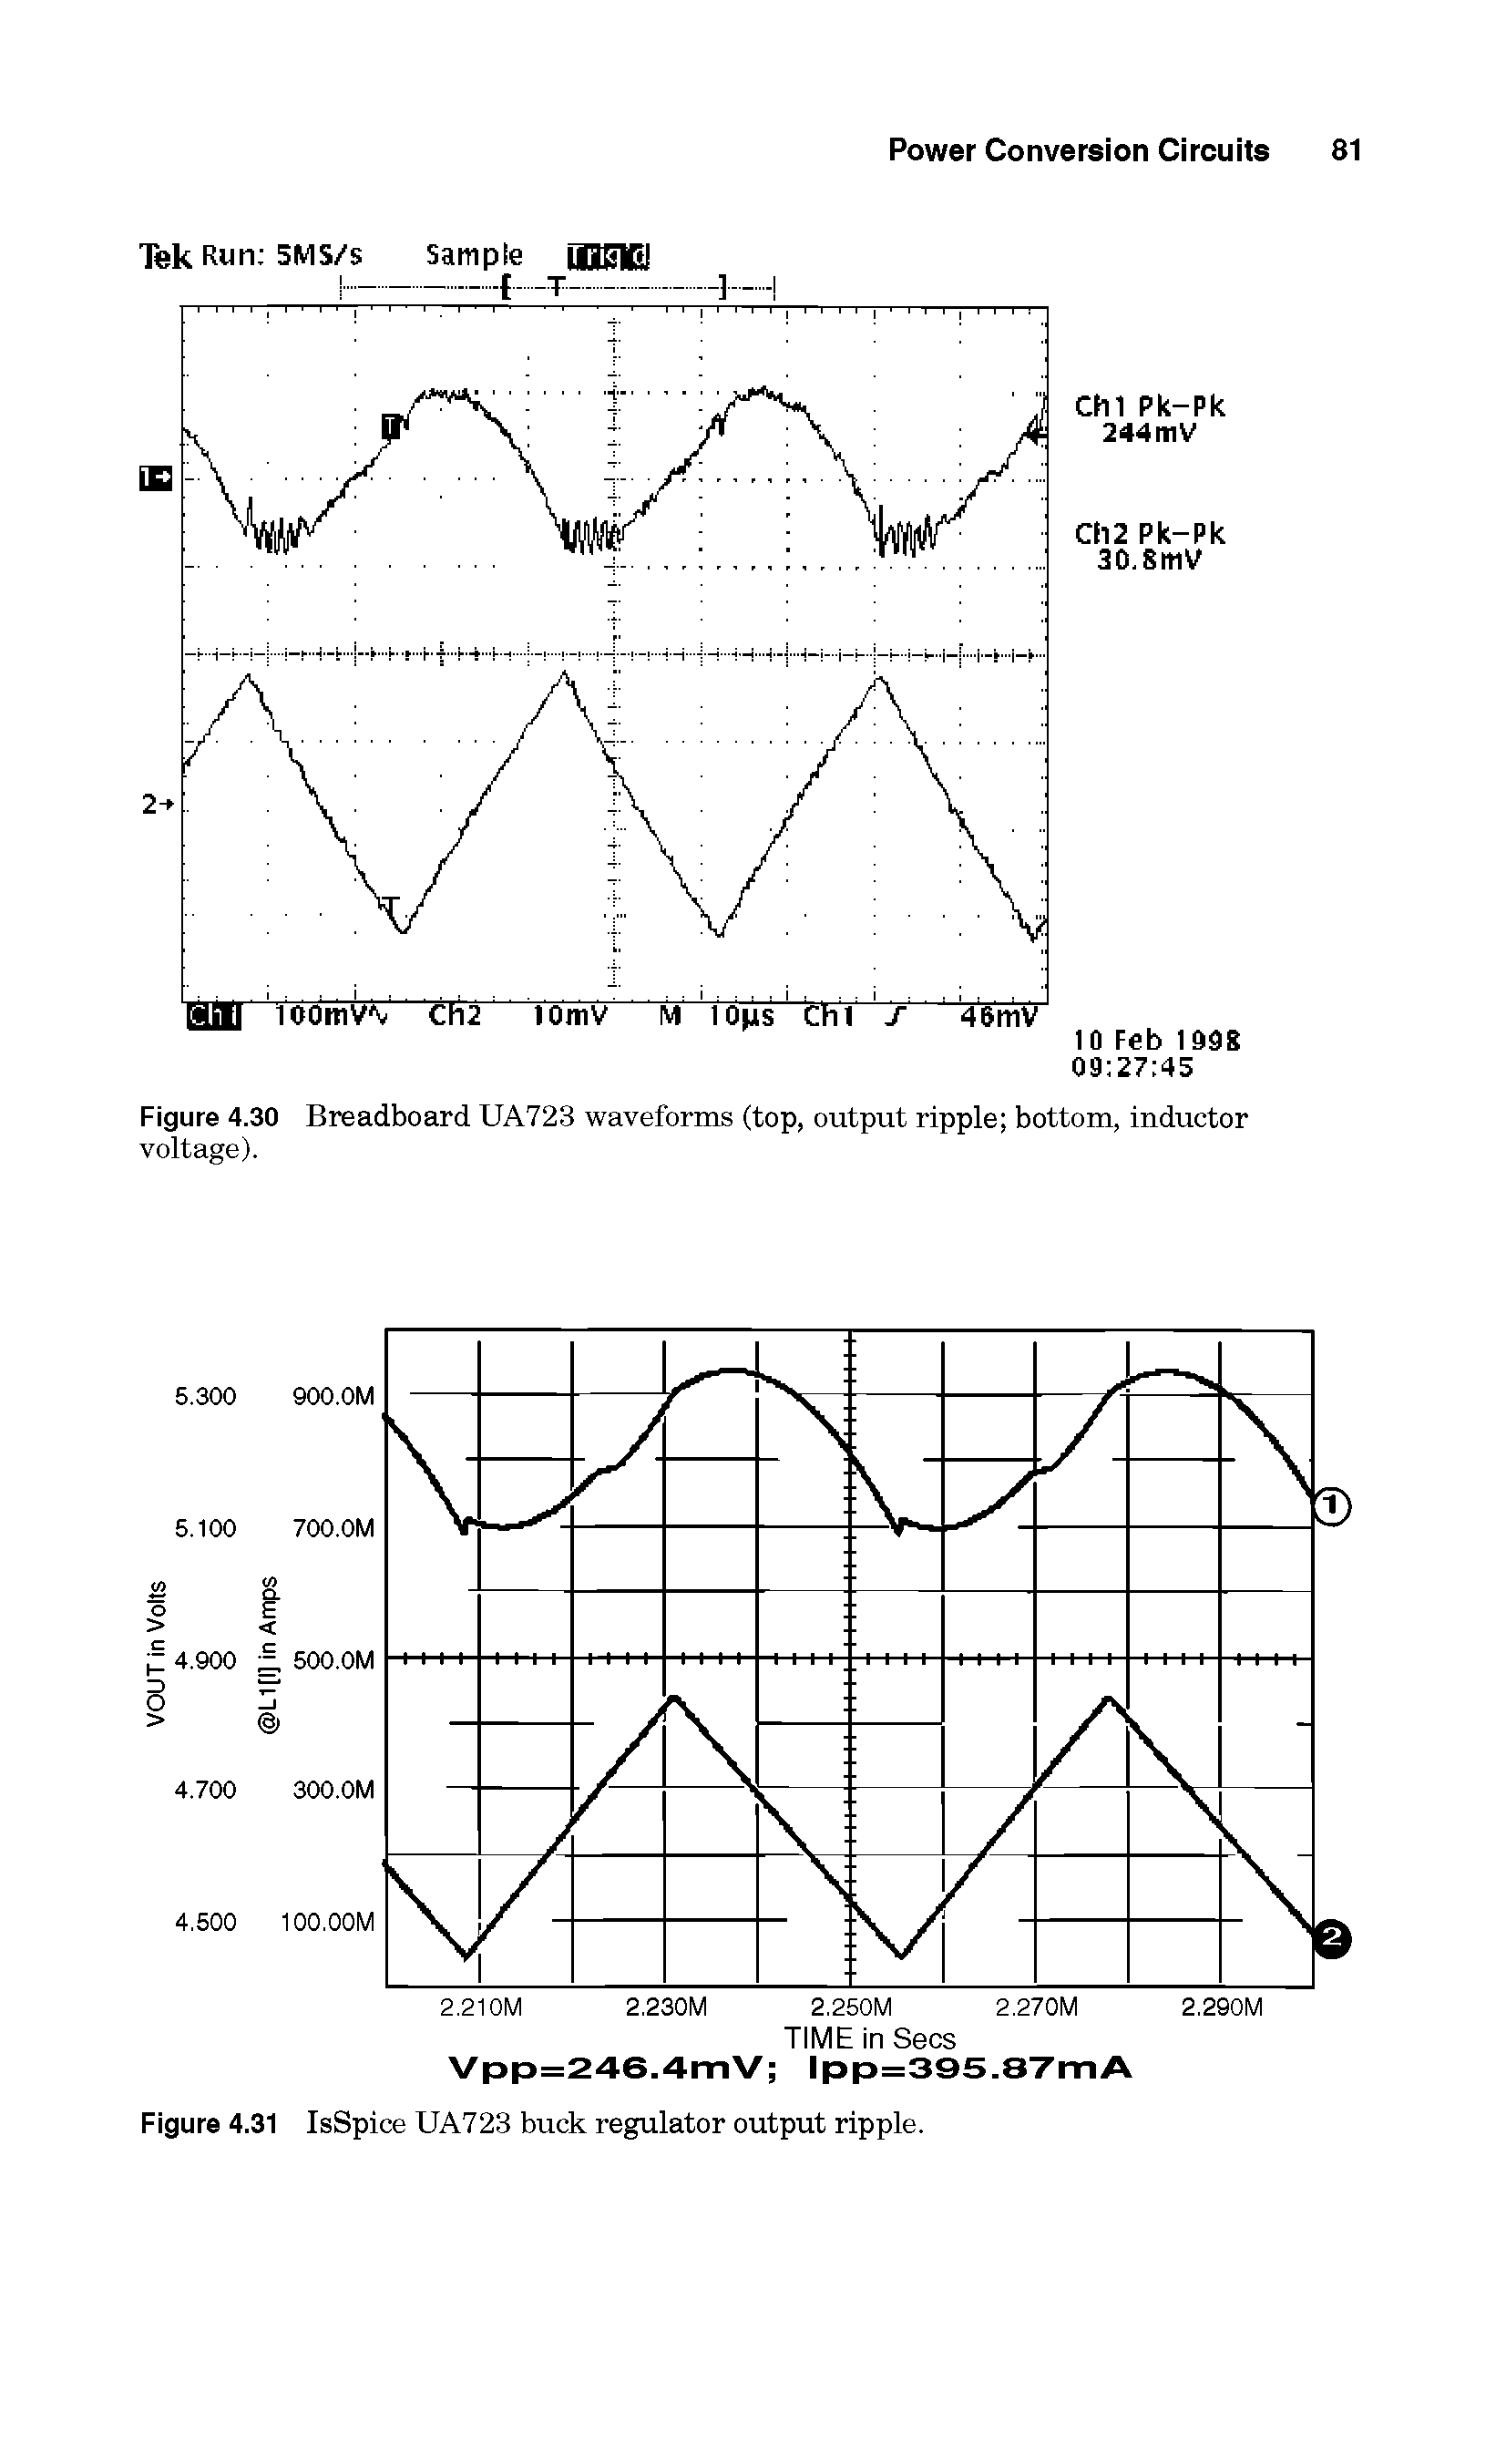 Figure 4.31 IsSpice UA723 buck regulator output ripple.